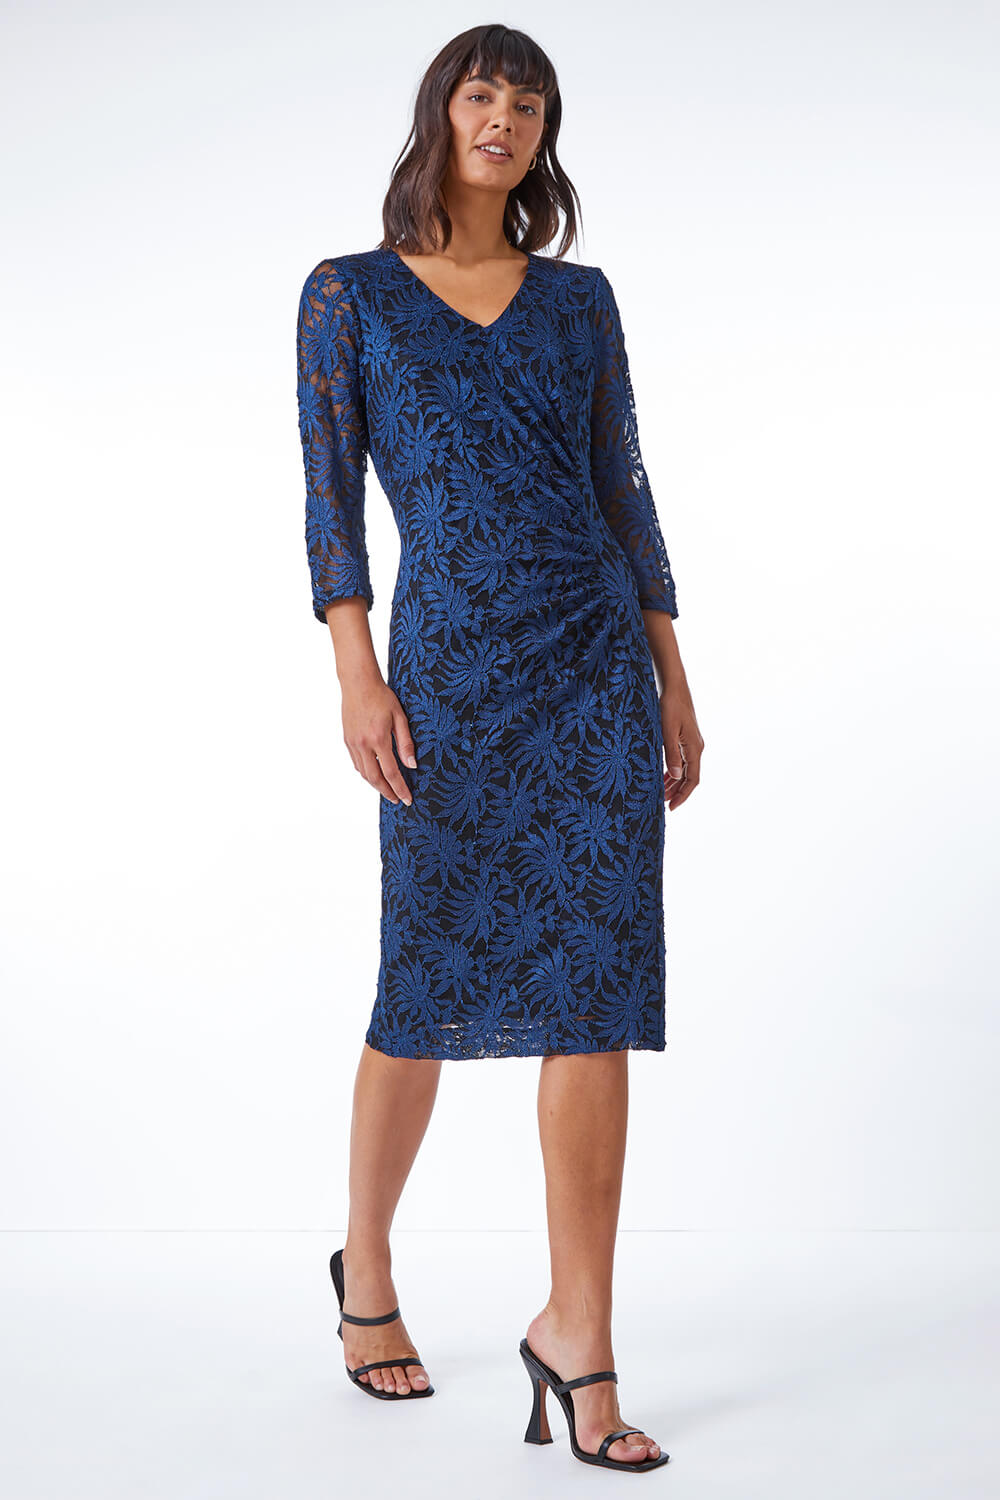 Palm Print Ruched Lace Dress in Petrol Blue - Roman Originals UK